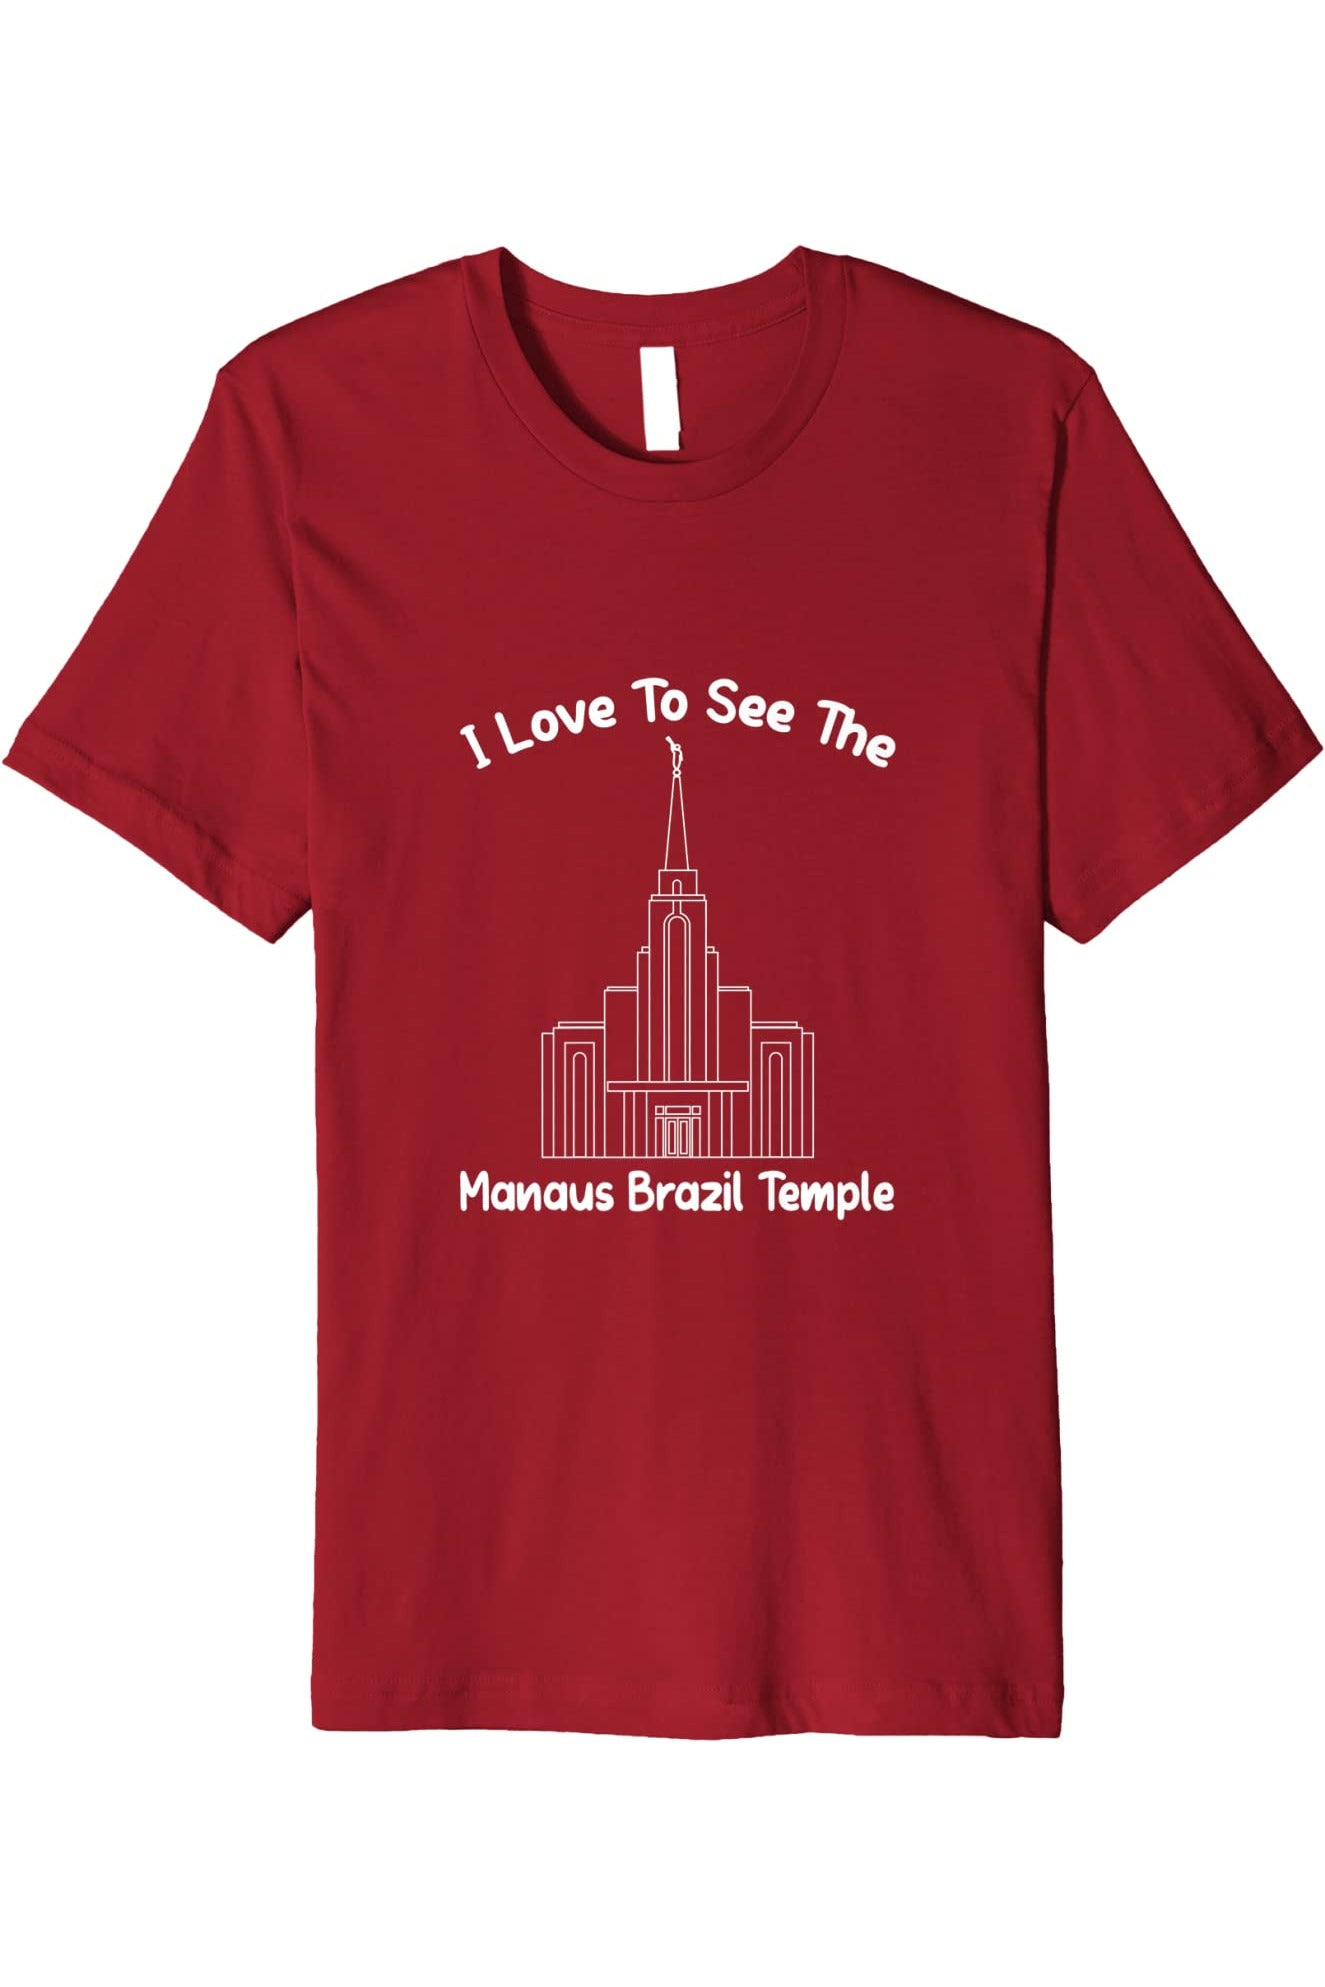 Manaus Brazil Temple T-Shirt - Premium - Primary Style (English) US